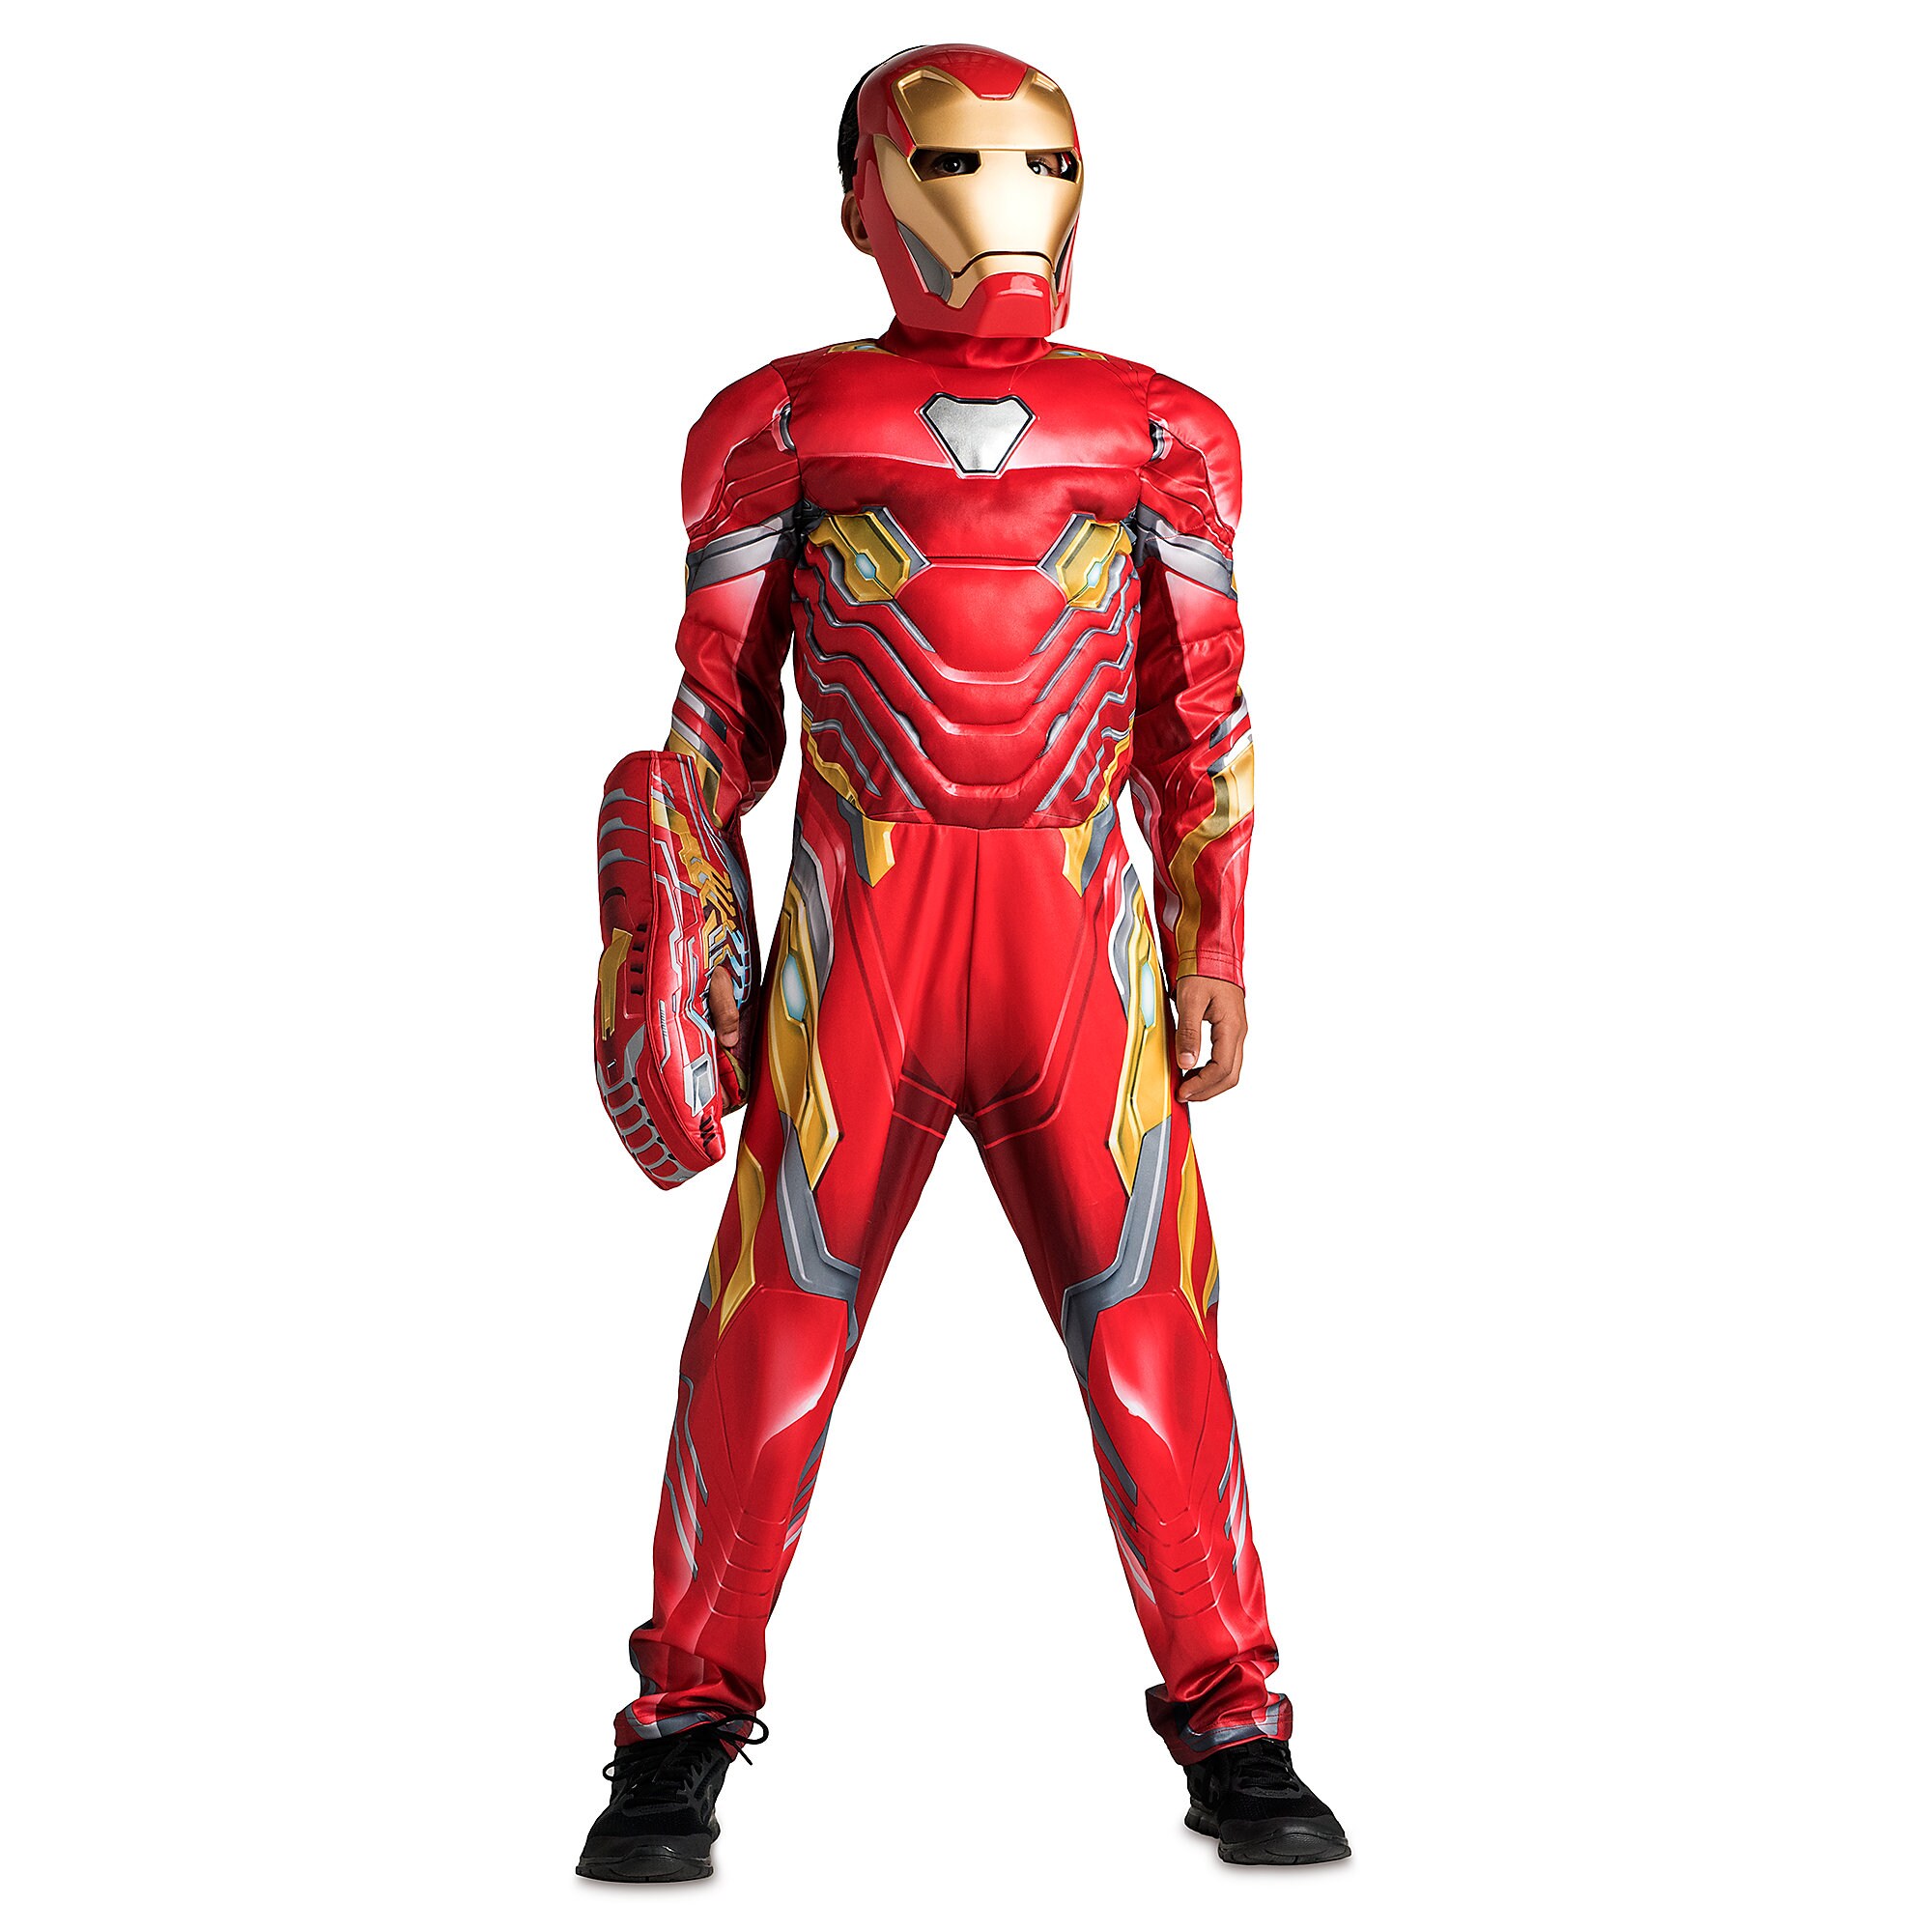 Iron Man Costume for Kids - Marvel's Avengers: Infinity War now ...